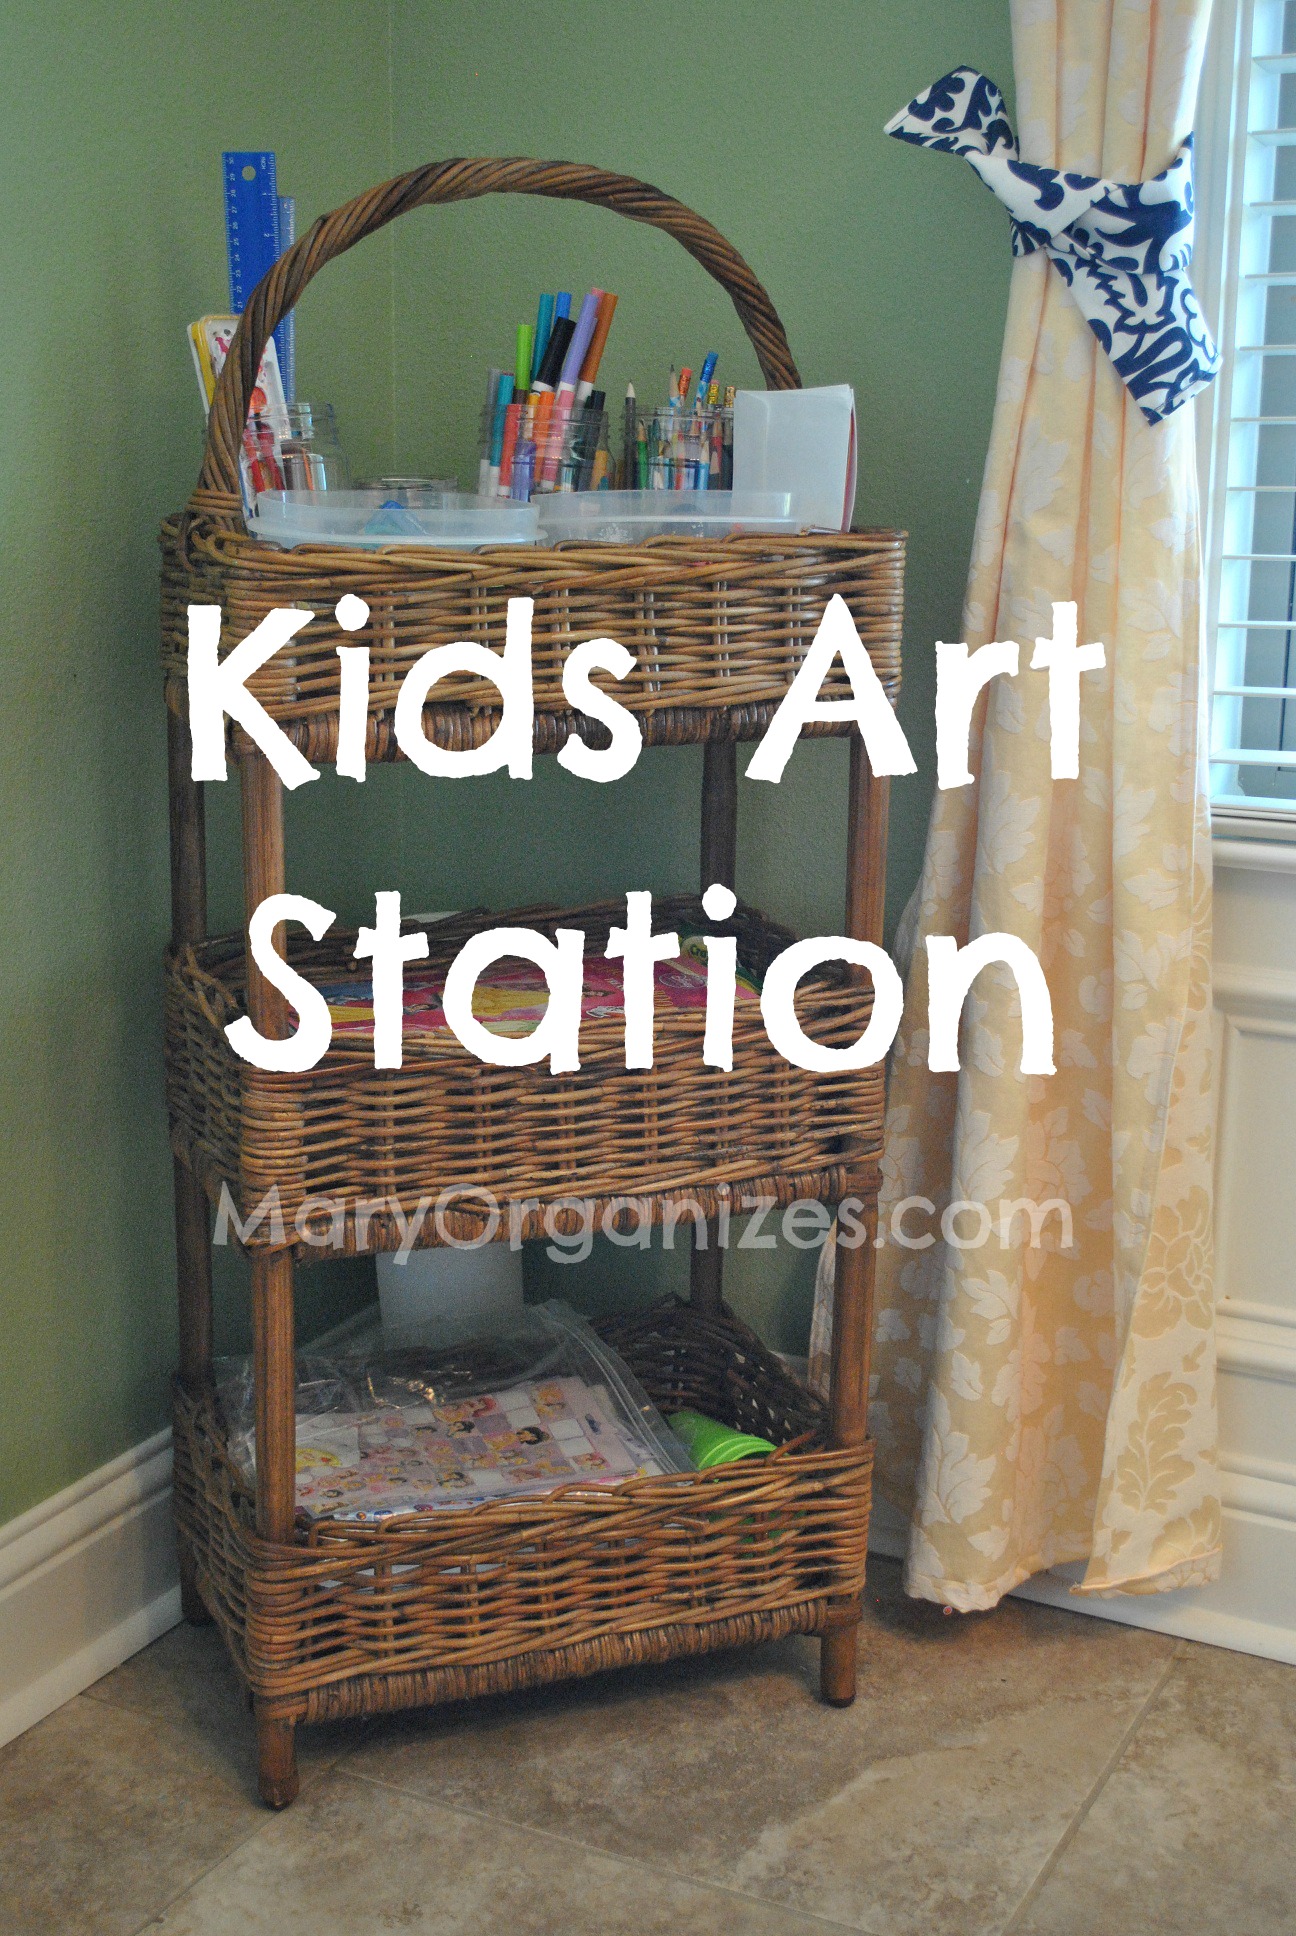 Child's Art Station 